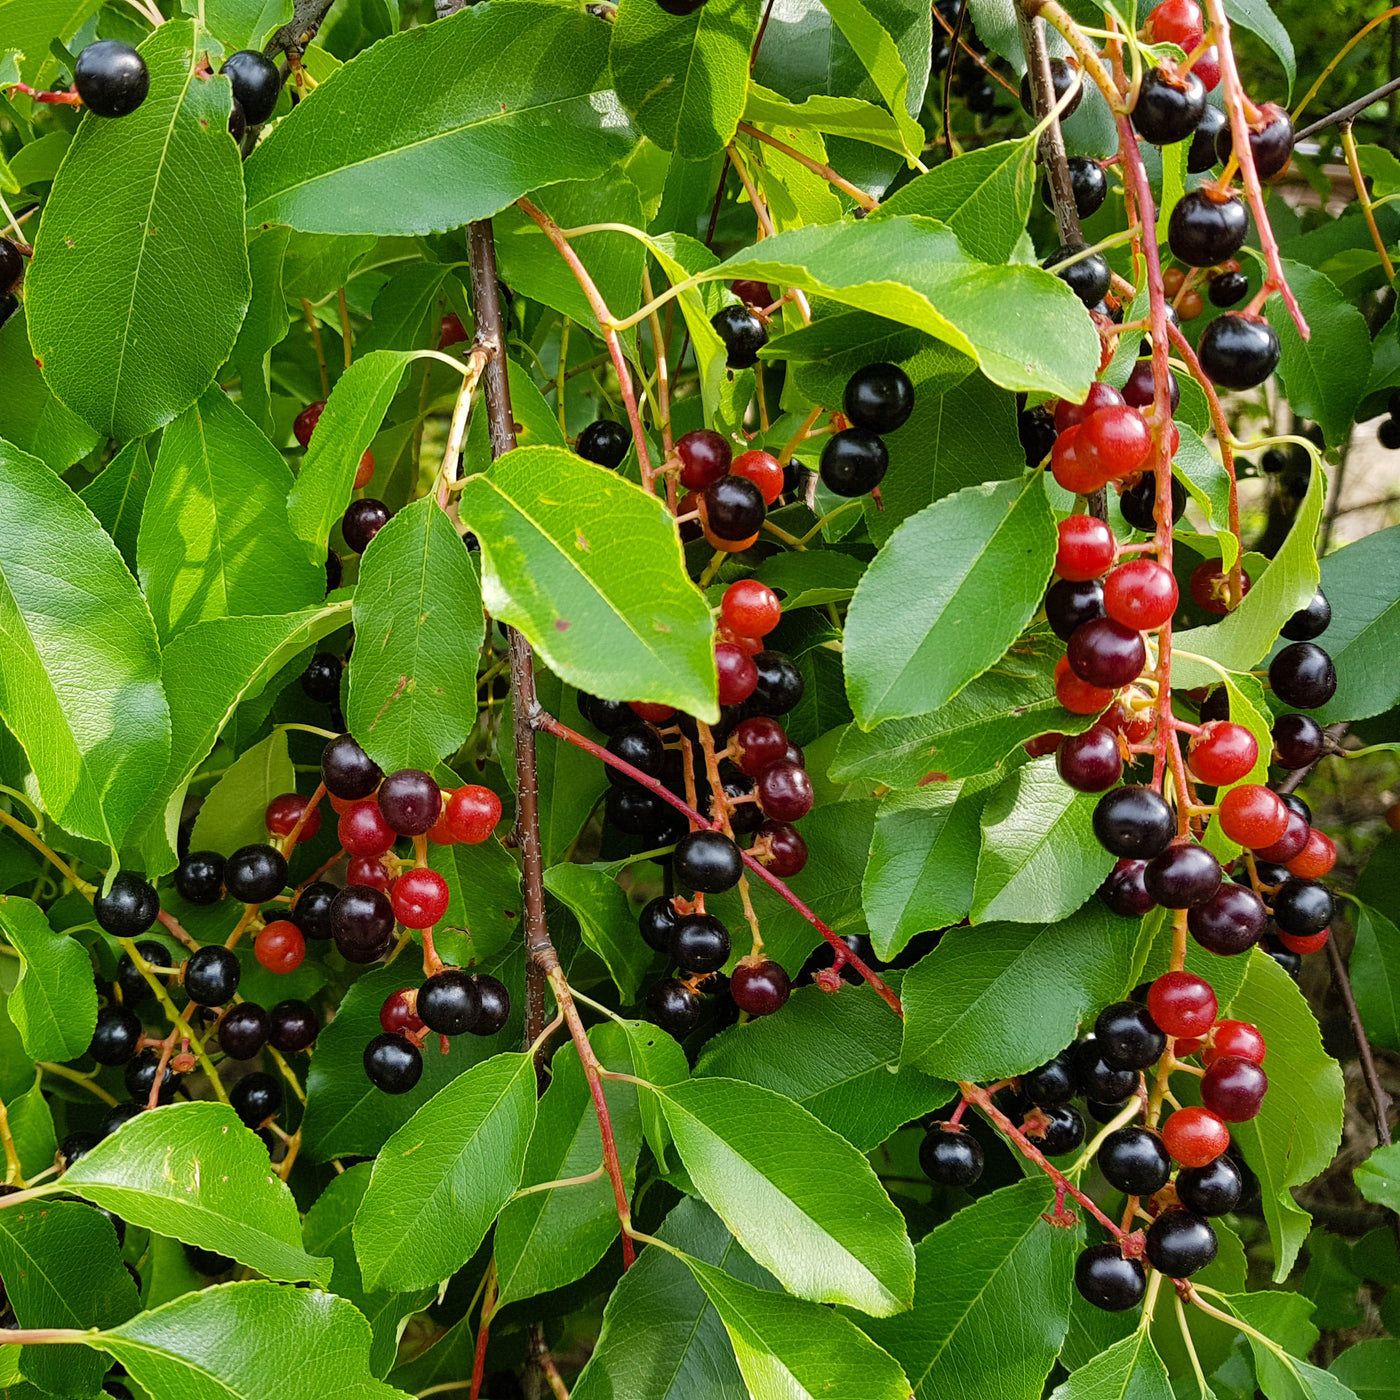 Species Spotlight: Black Cherry